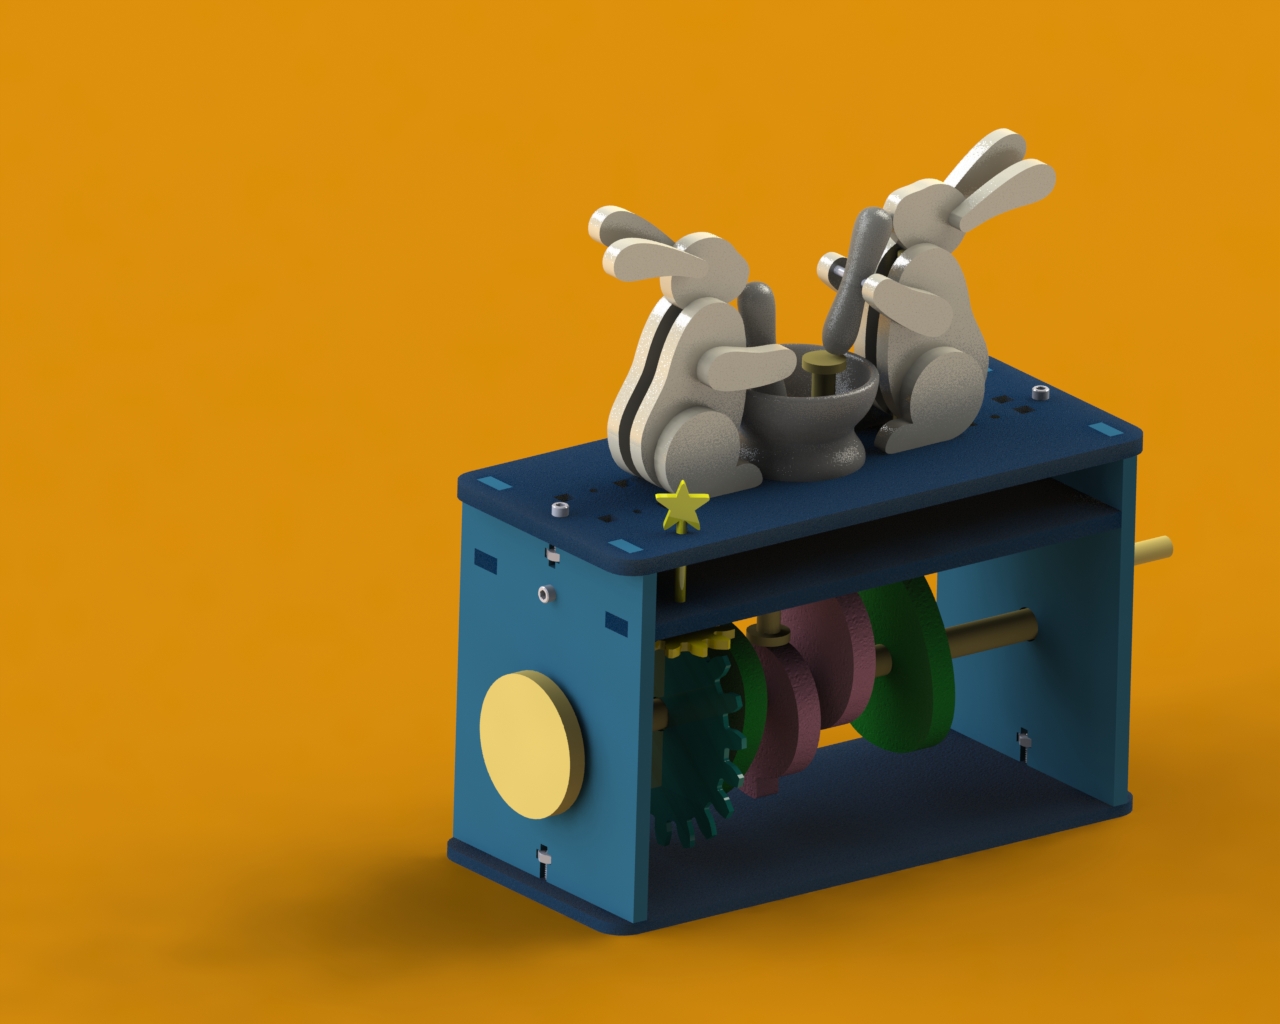 Moon Bunnies CAD rendering